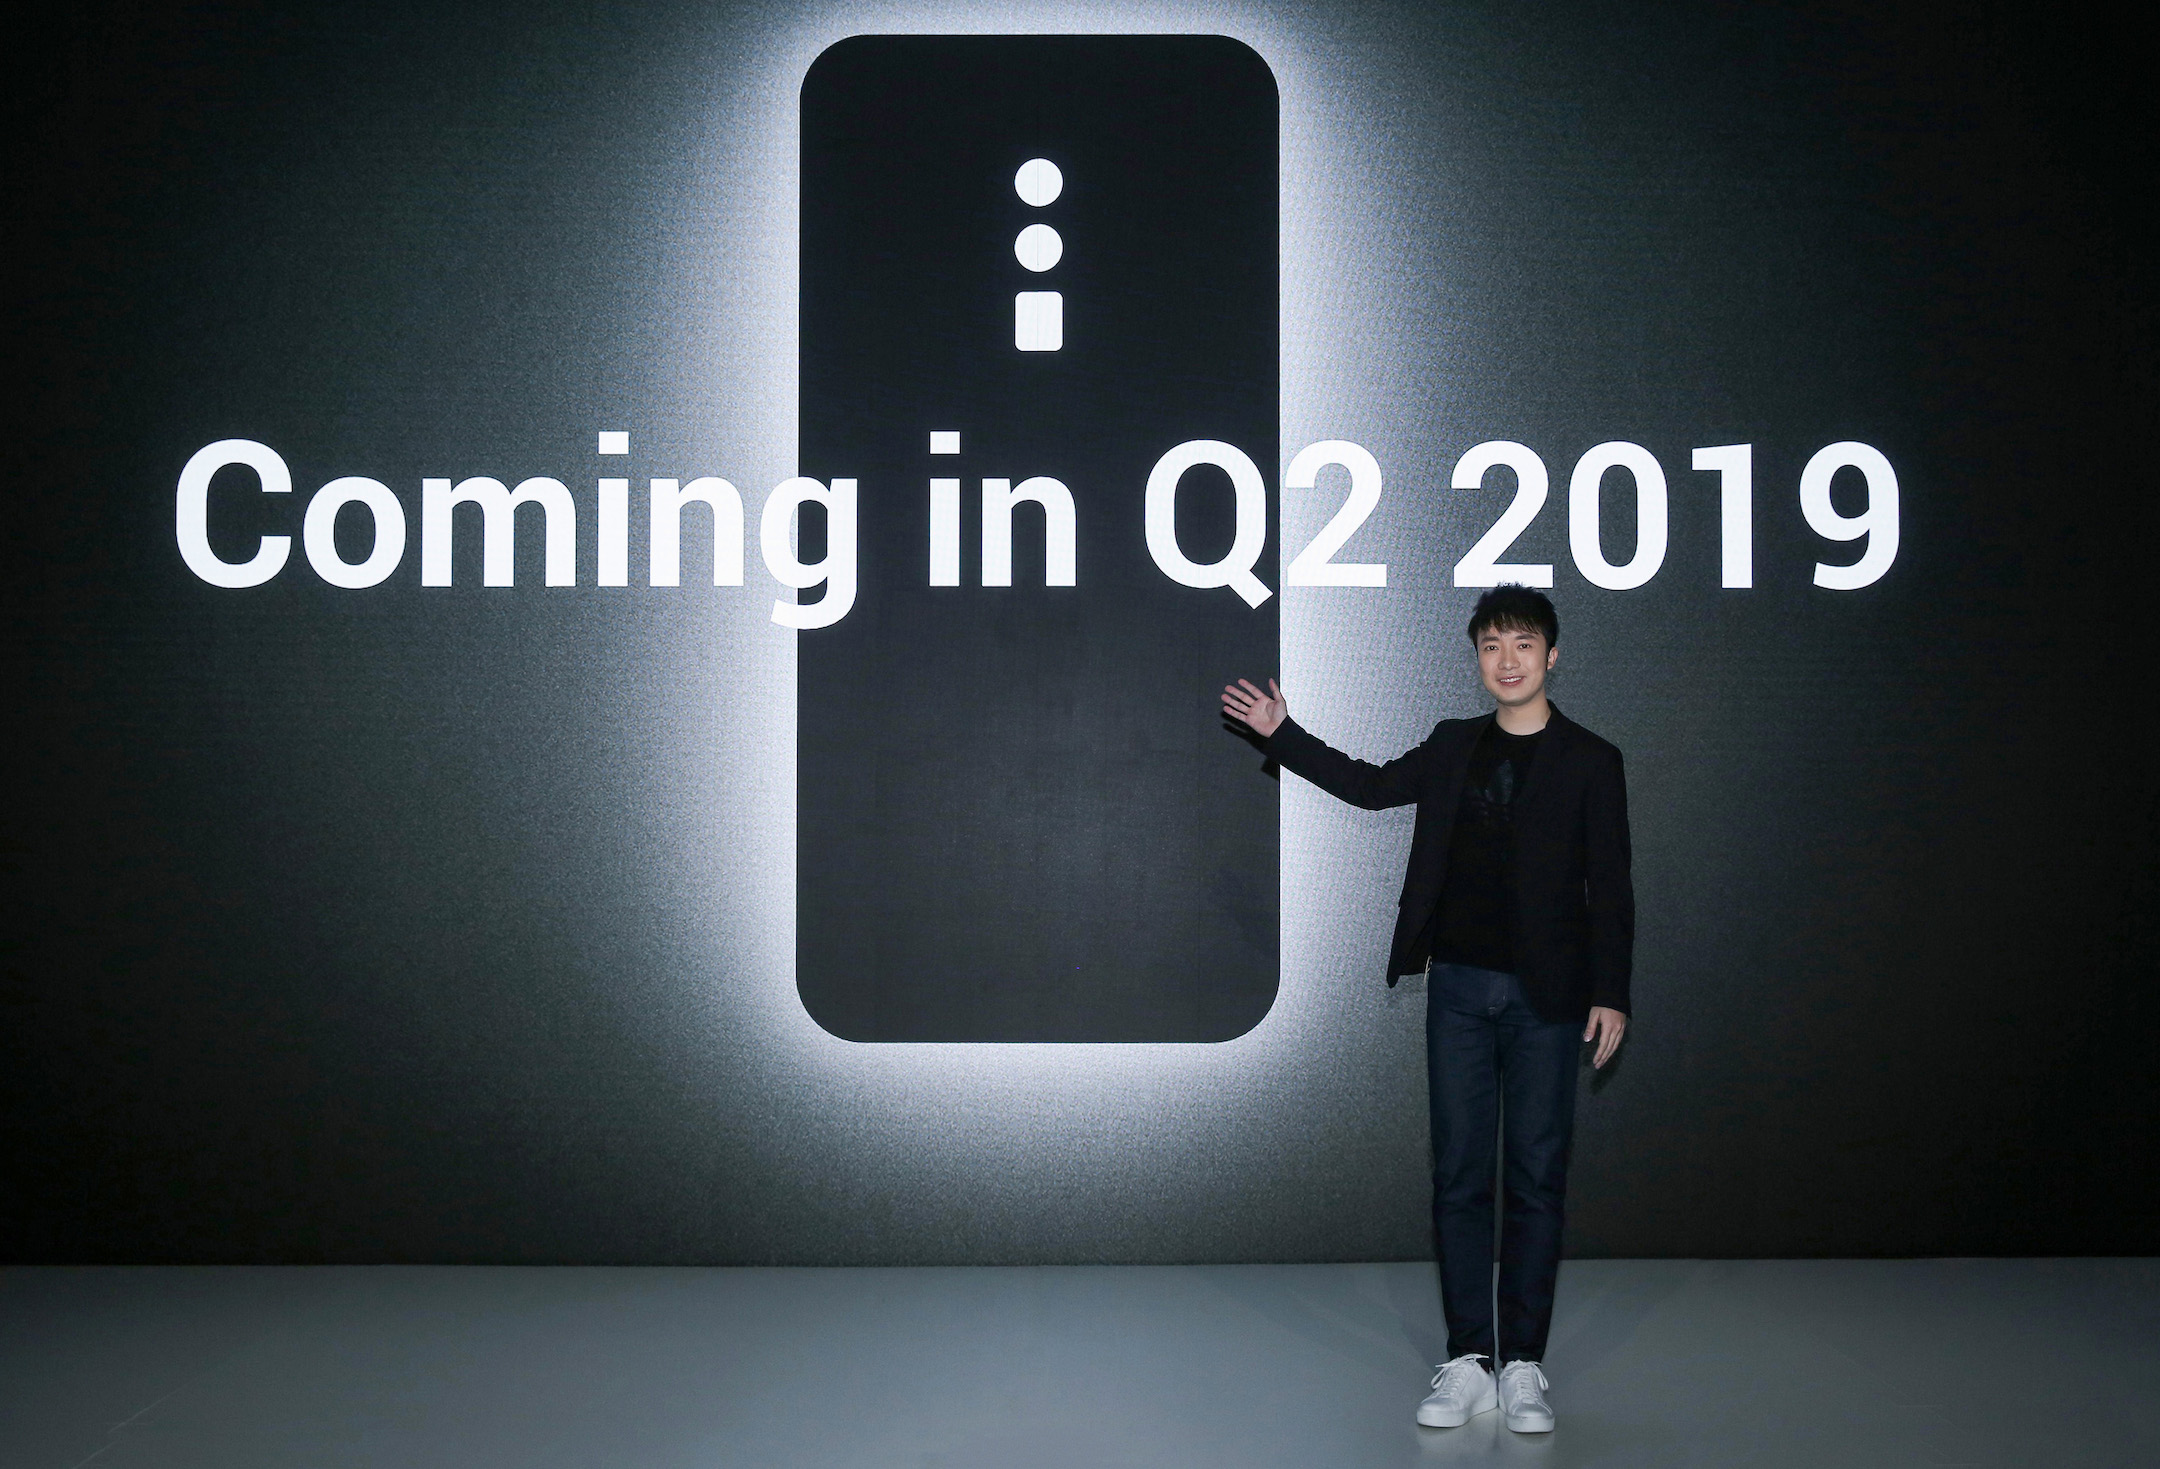 OPPO 首部5G手机亮相2019 OPPO创新大会，新品将搭载10倍混合光学变焦